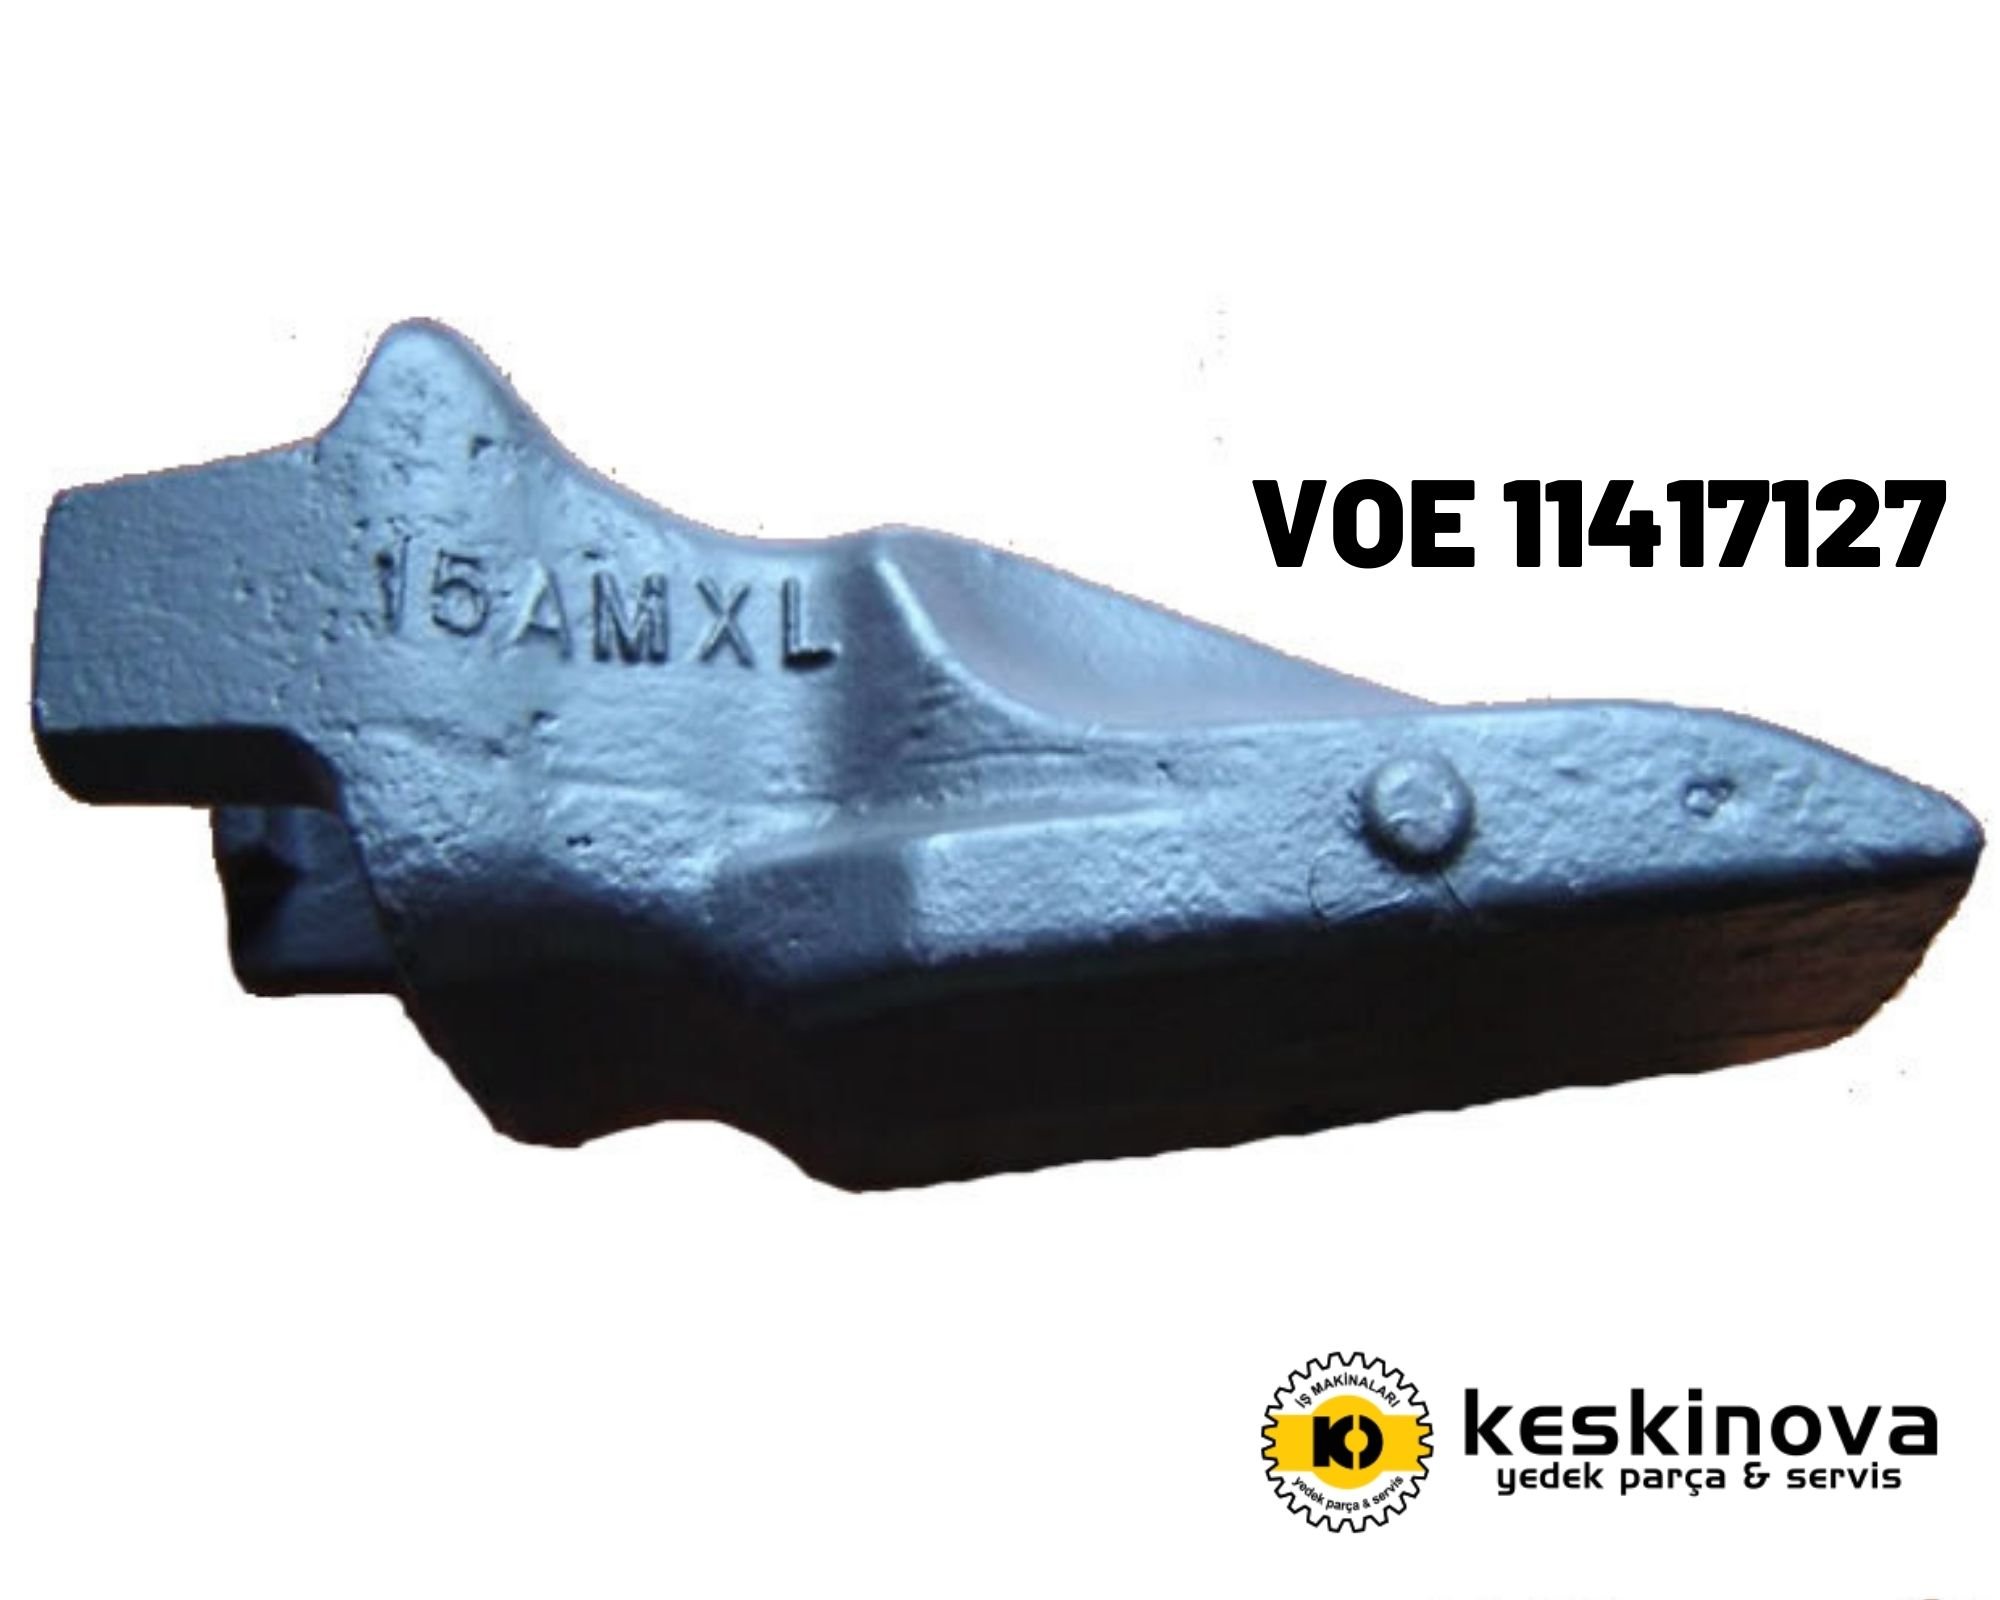 VOLVO OEM L90/F,L110E/F,L120/F MODEL 15AMXL(VOE 11417127) TIRNAK